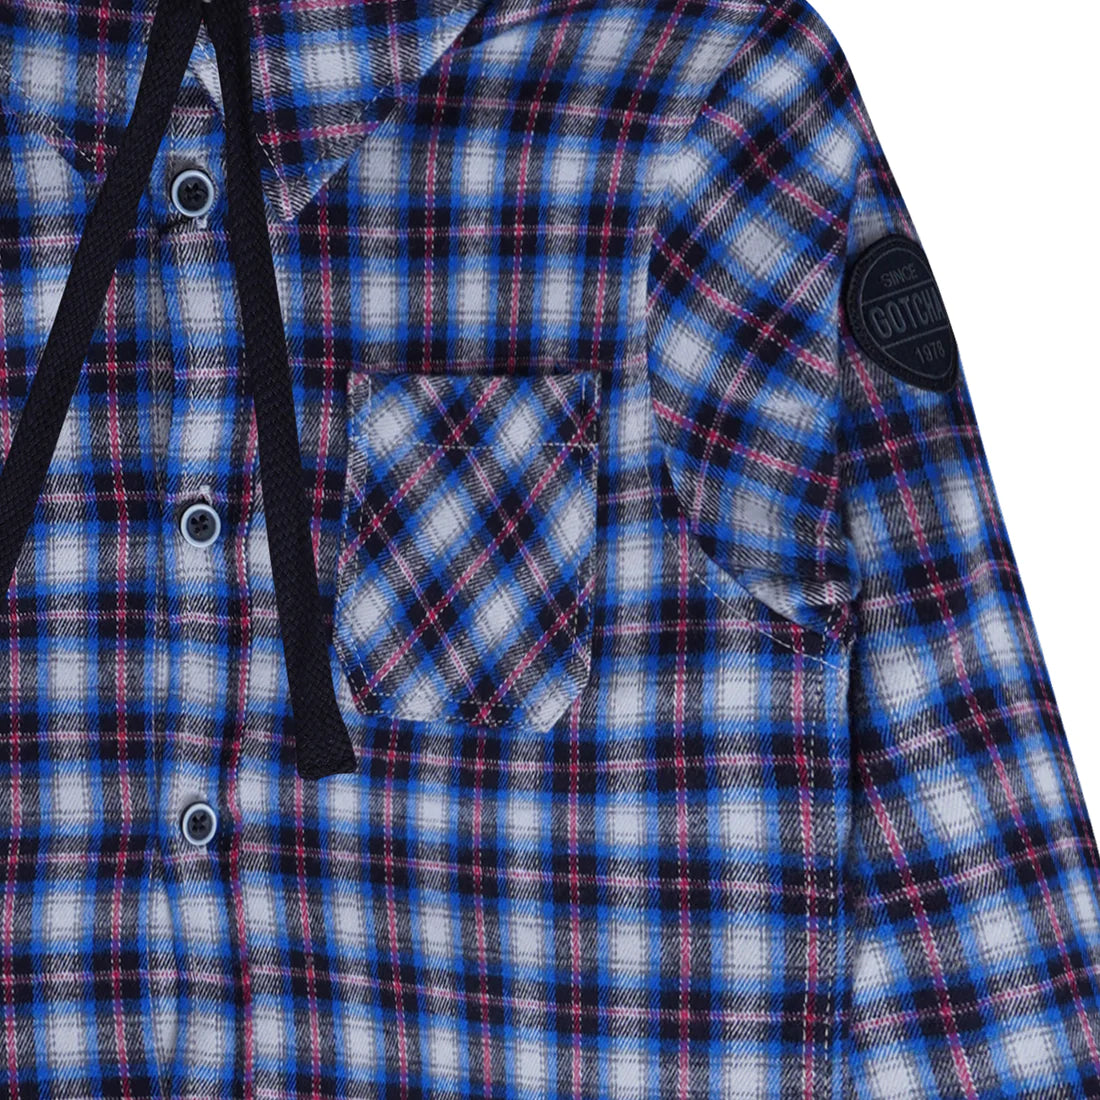 Twisti Long-sleeved hooded shirt